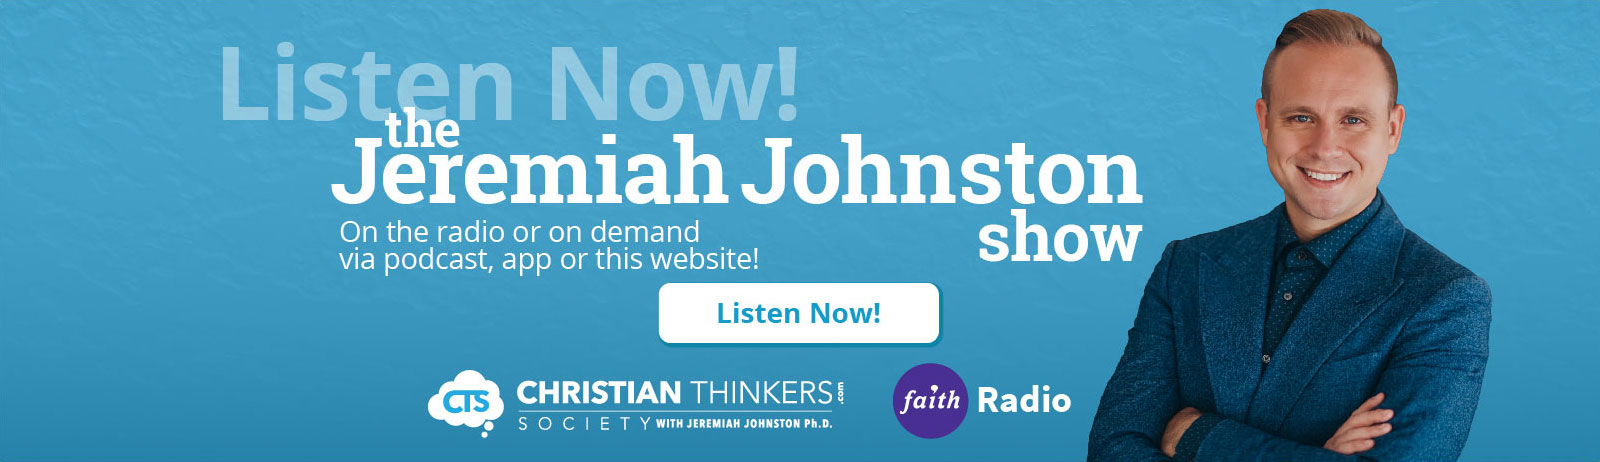 Listen Now to the Jeremiah Johnston Show!